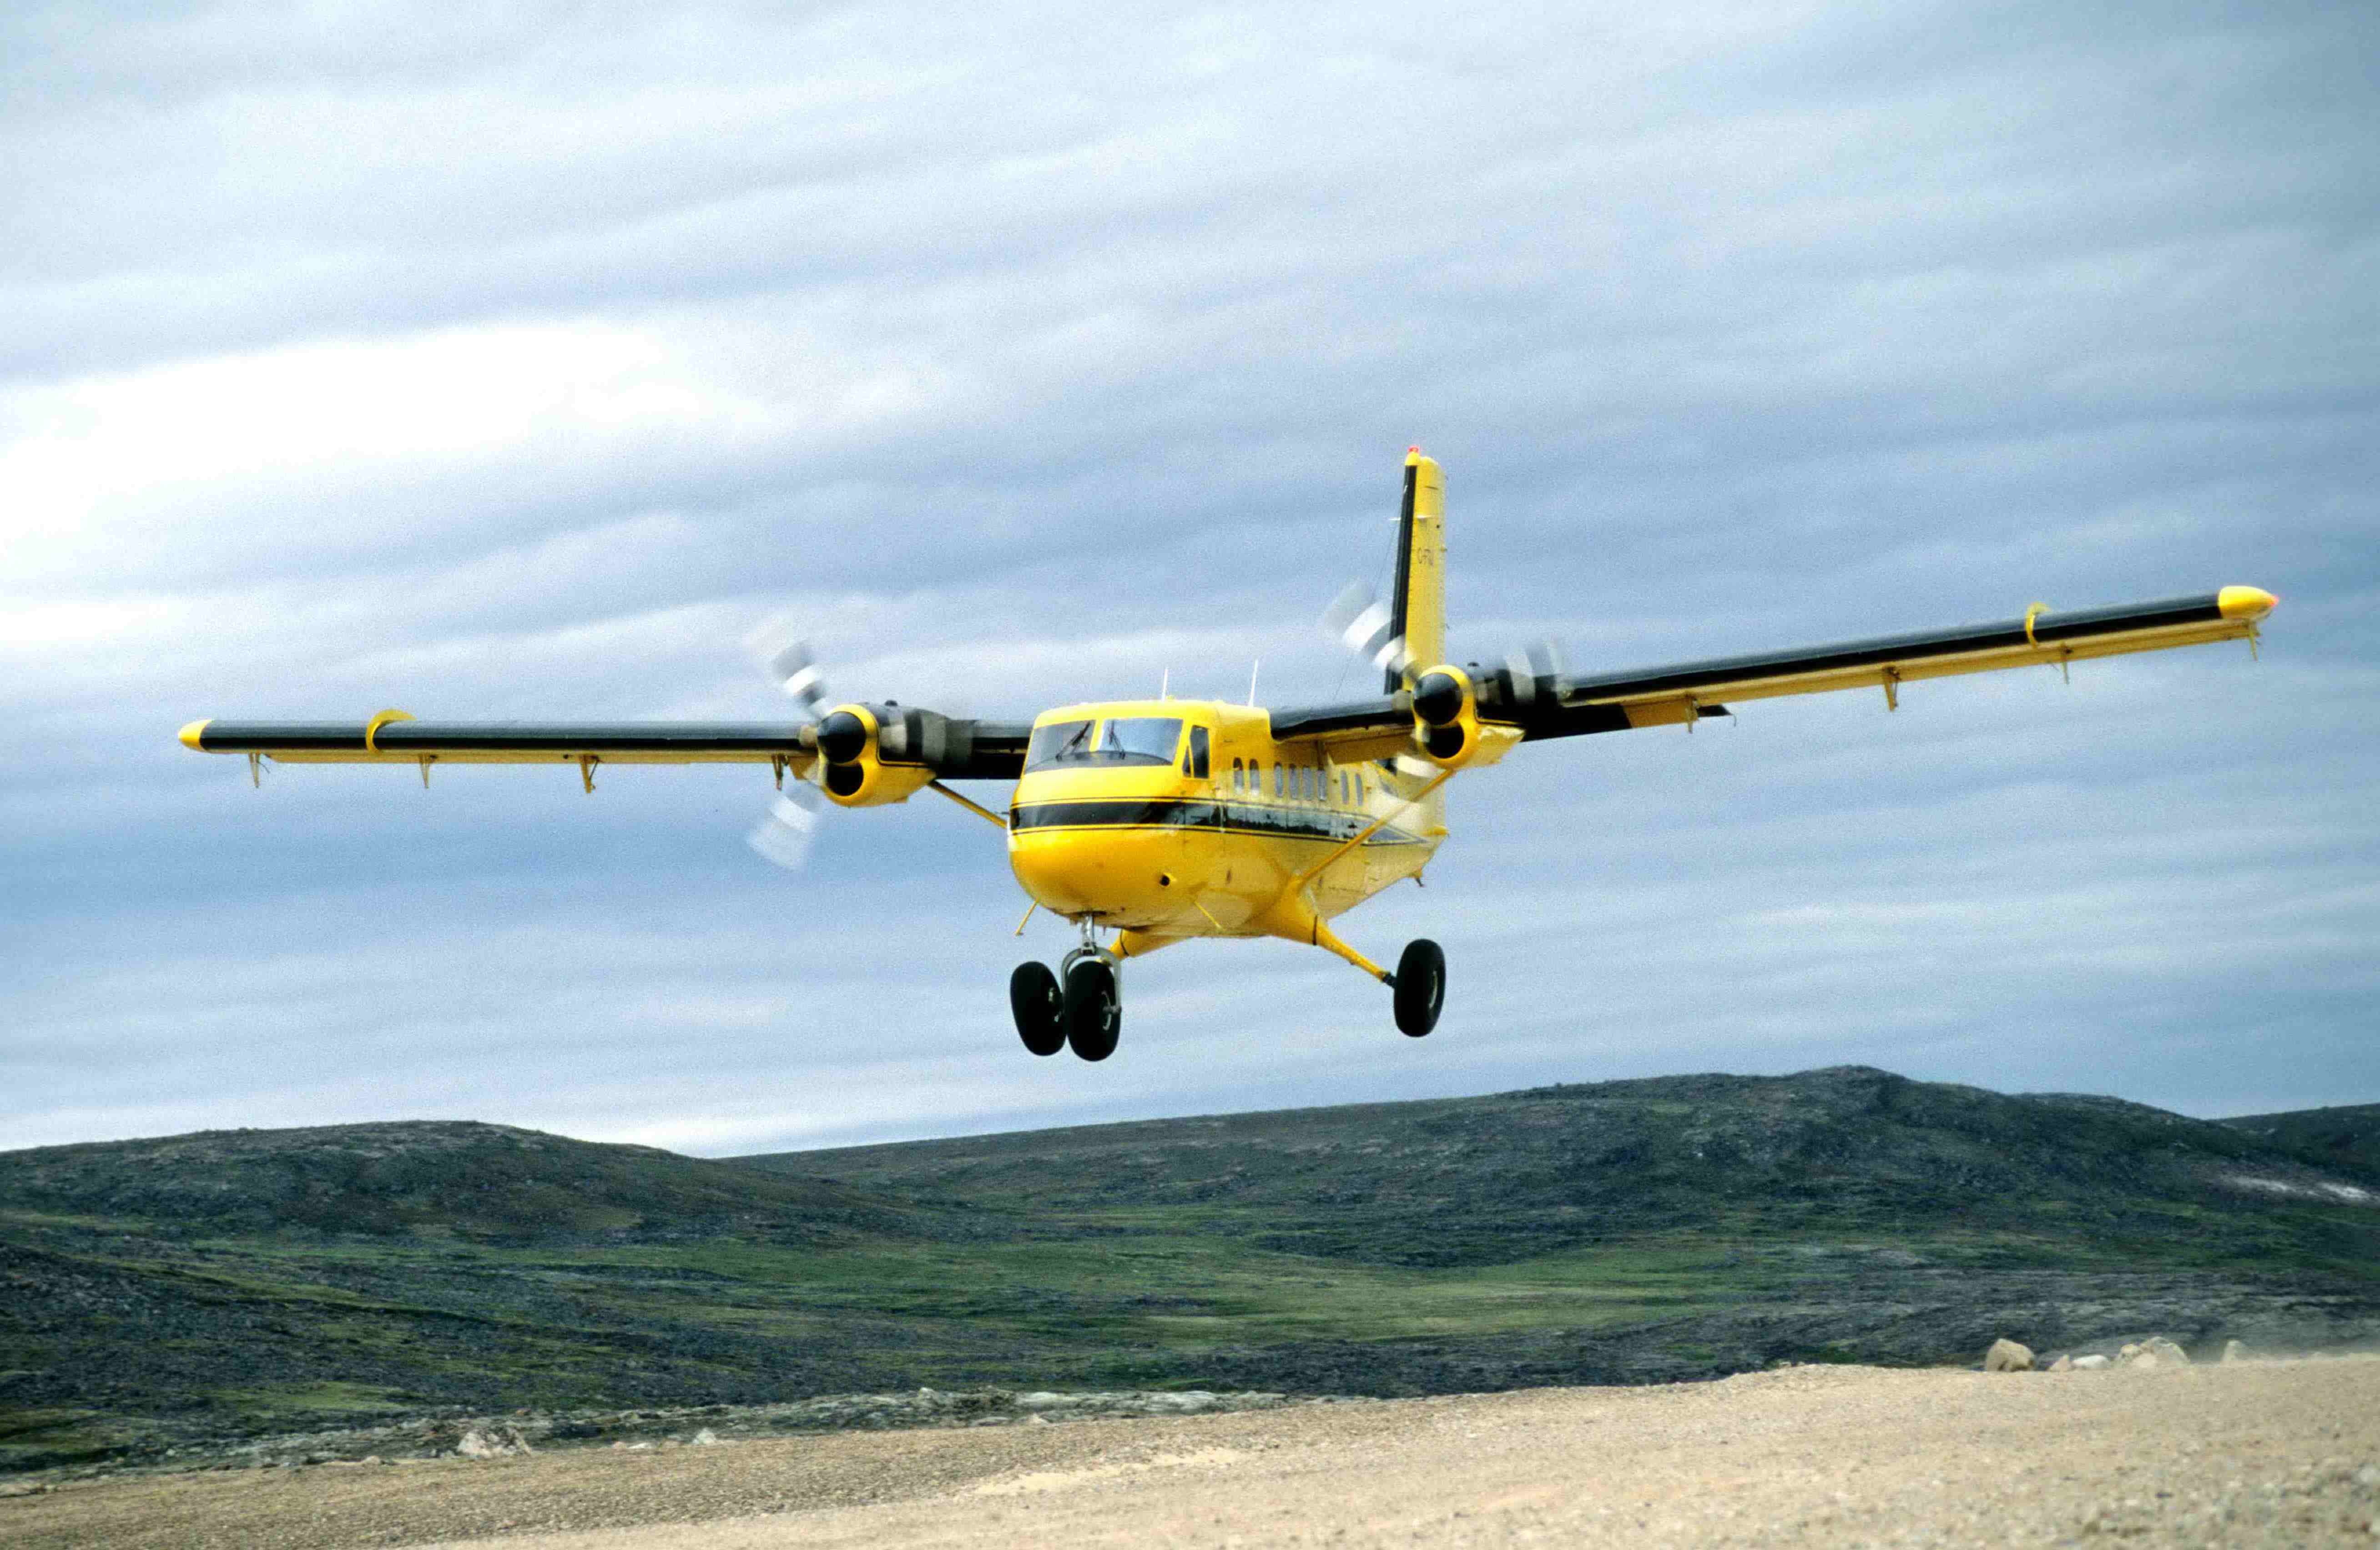 De Havilland Canada DHC-6 Twin Otter previous